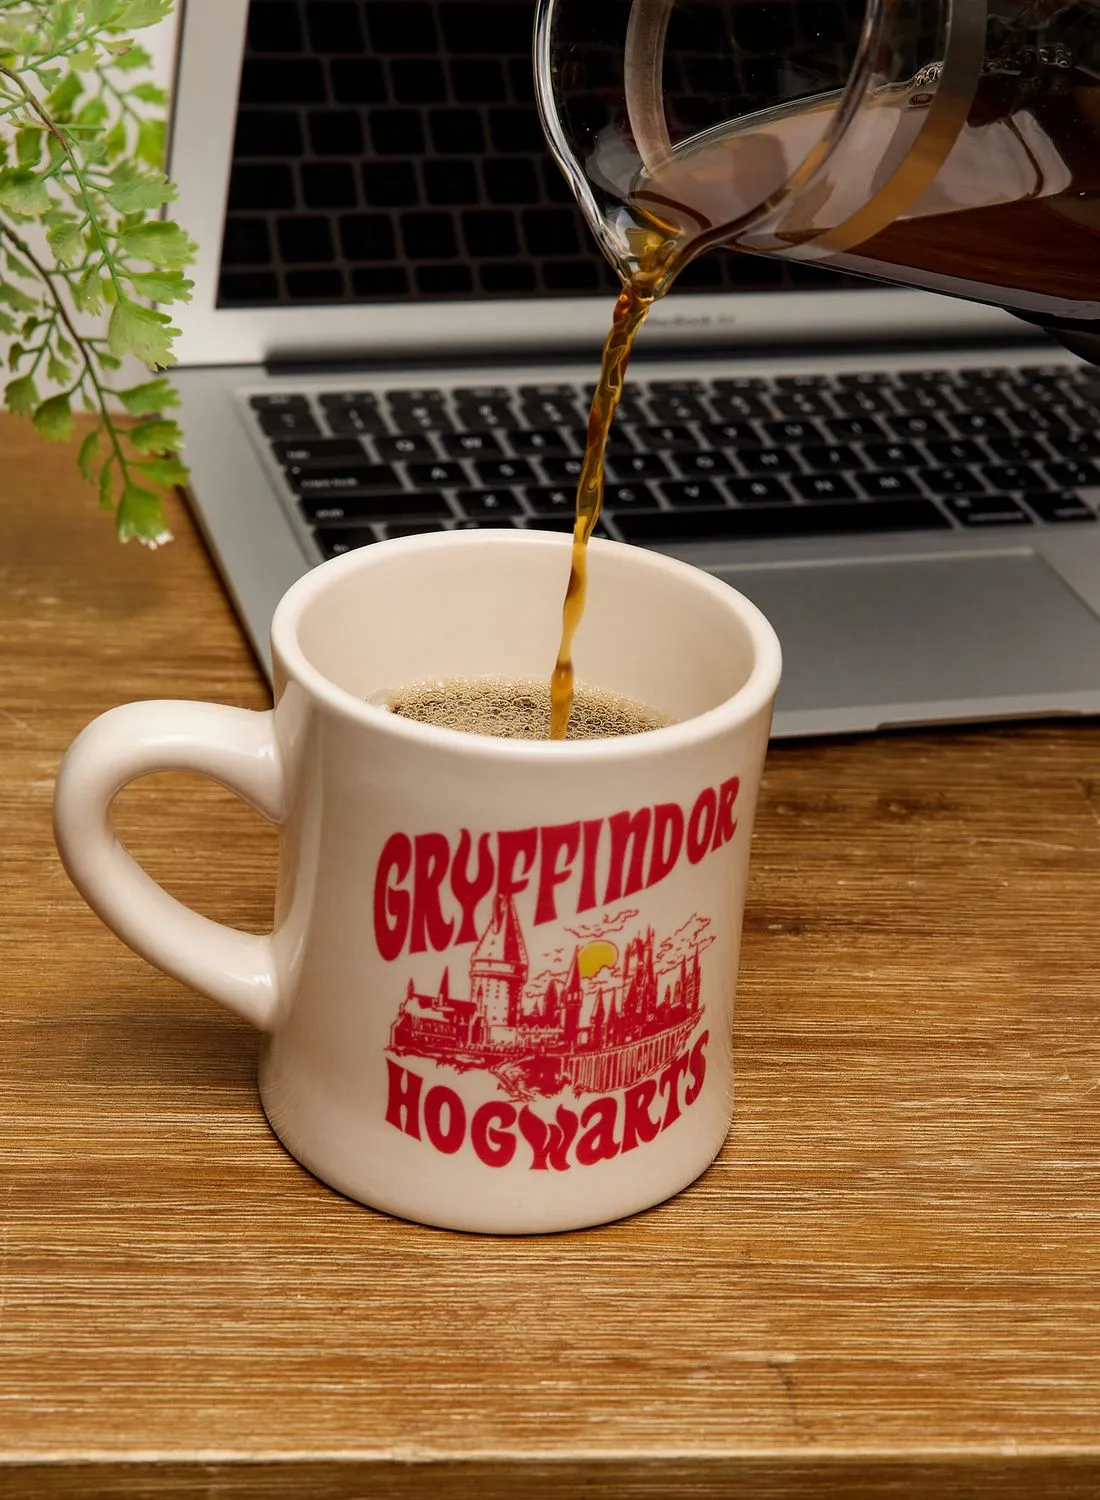 Typo Harry Potter Gryffindor Mug